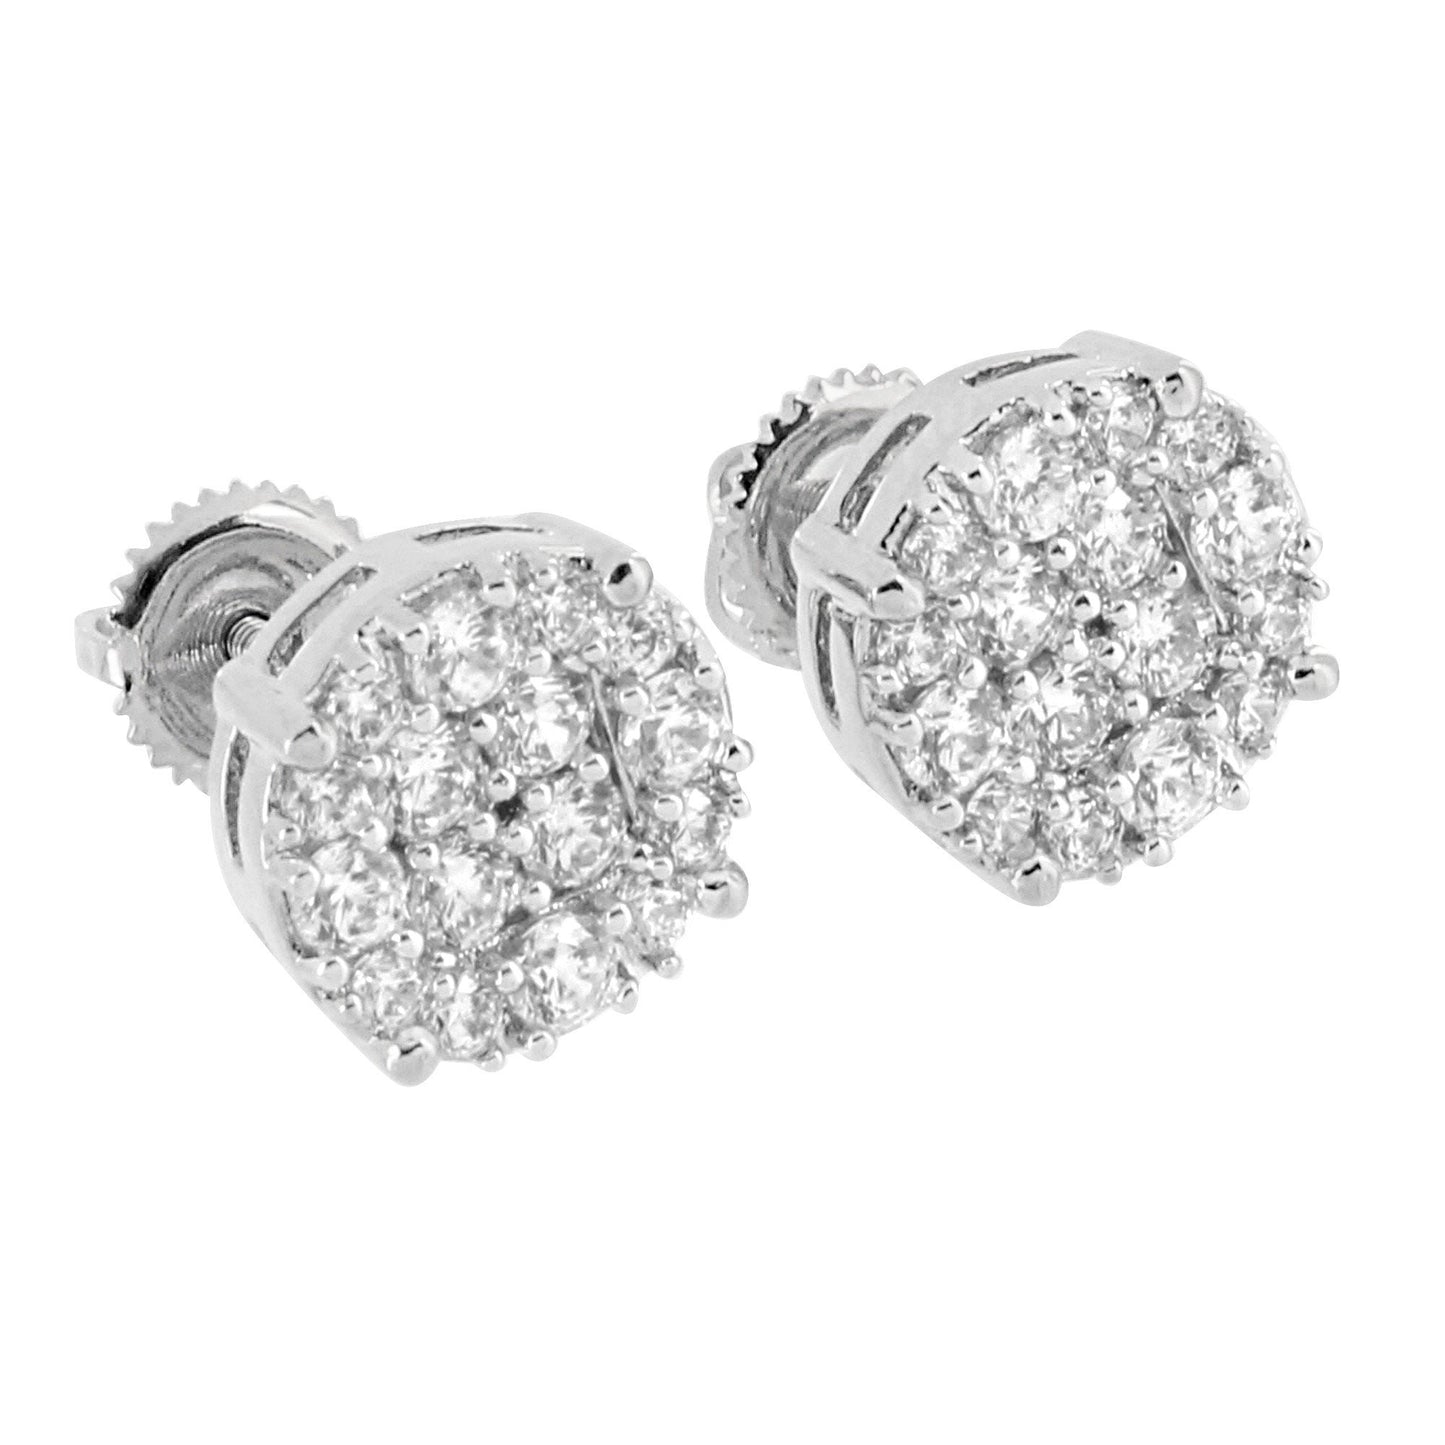 Cluster Set Earrings   Lab Diamonds Prong Set 14K White Gold Finish Screw On